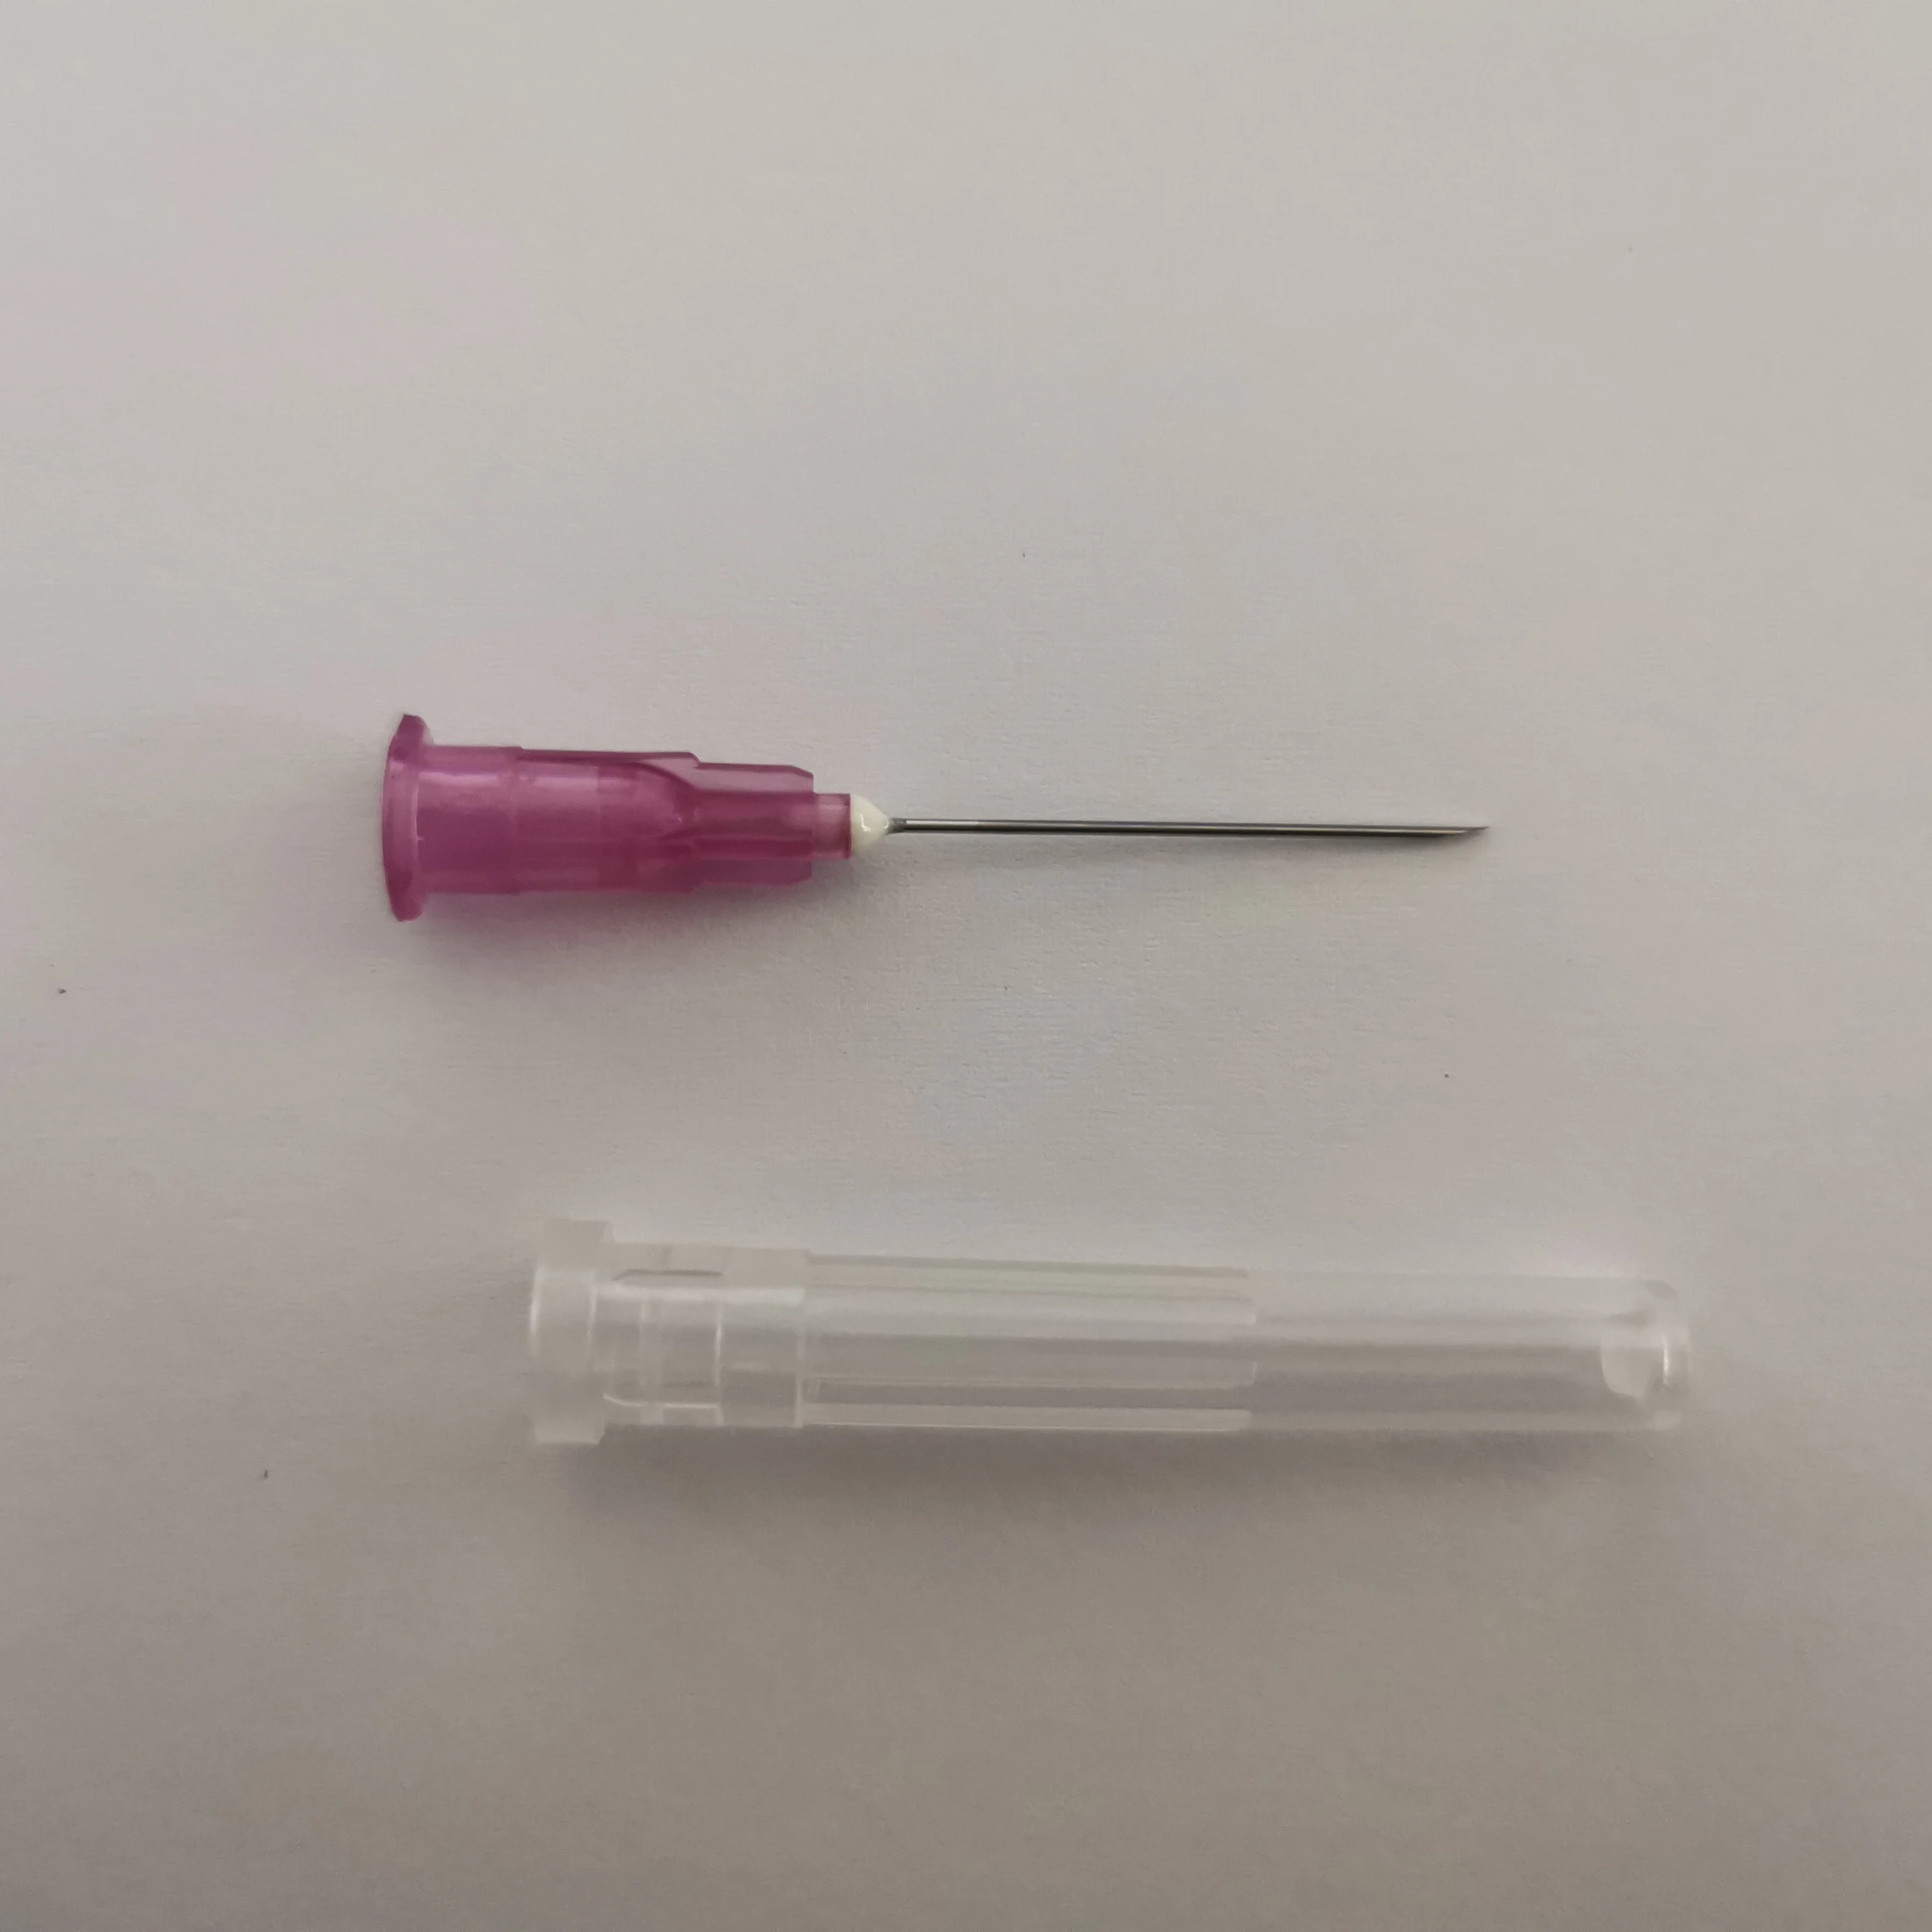 
medical sterile hypodermic needle 30g sterile hypodermic needle 32g hypodermic needle 